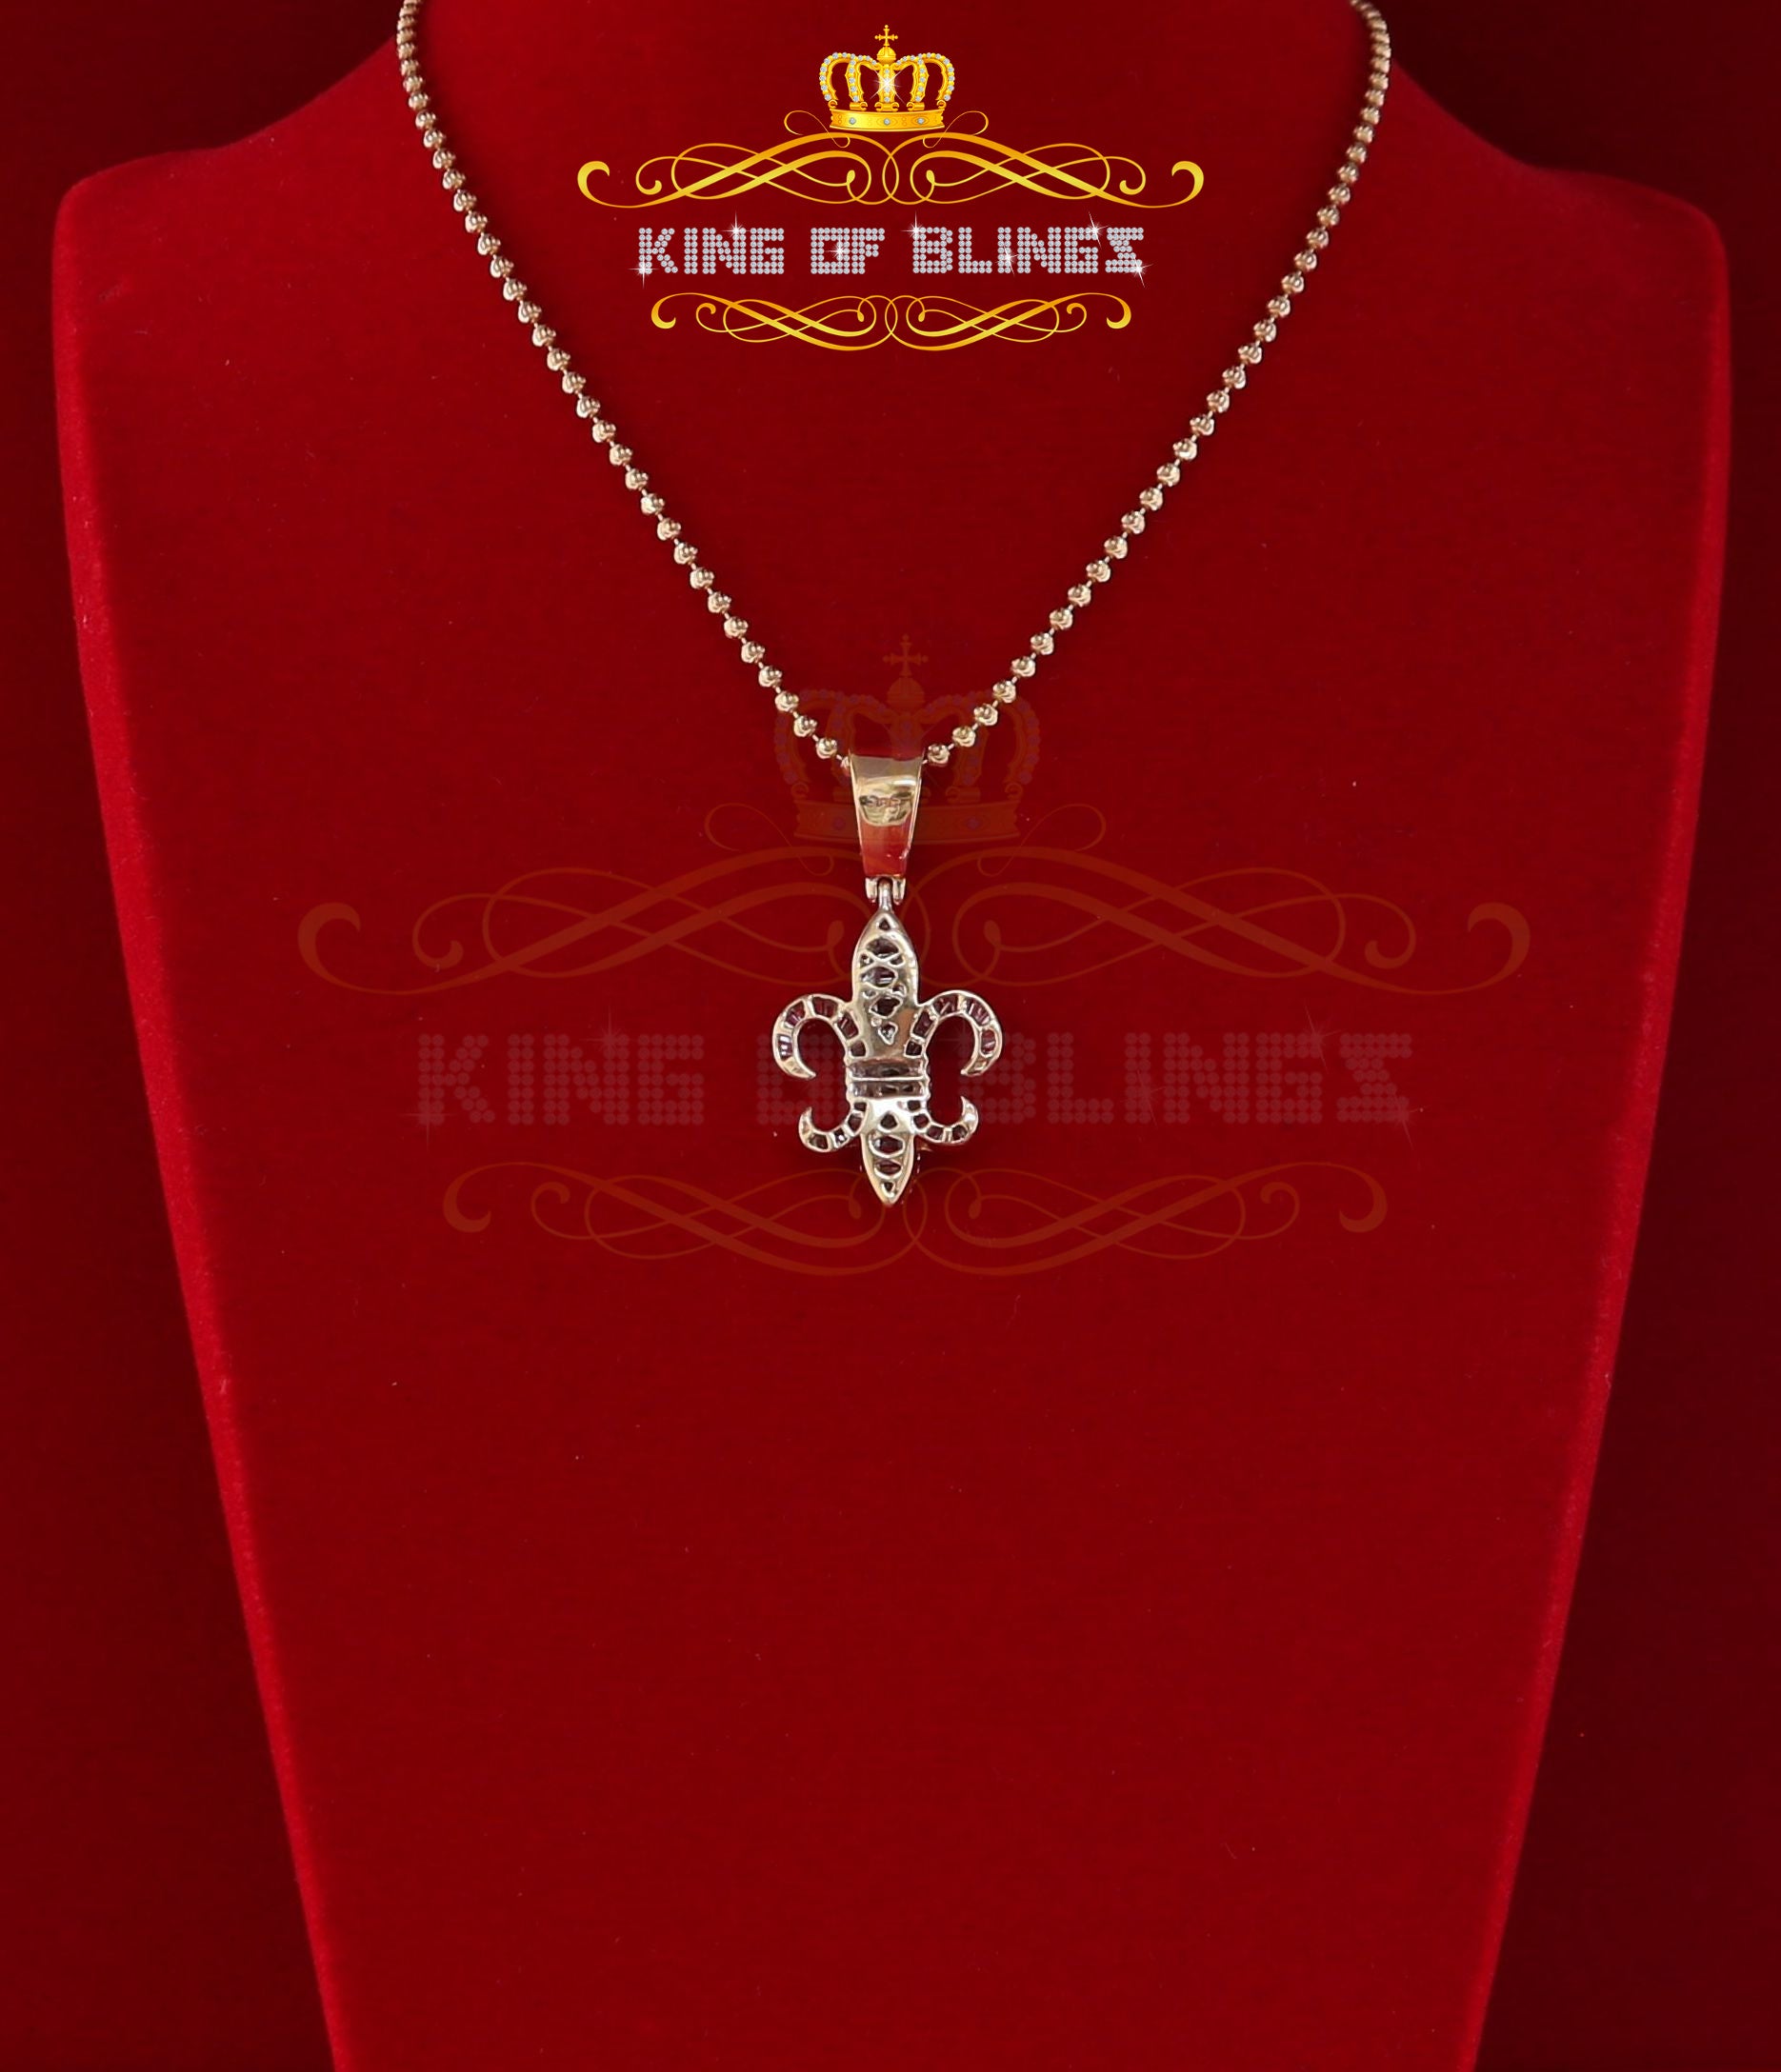 Charm Yellow Sterling Silver Fleur de Lis Pendant 2.09ct Cubic Zirconia Stone KING OF BLINGS